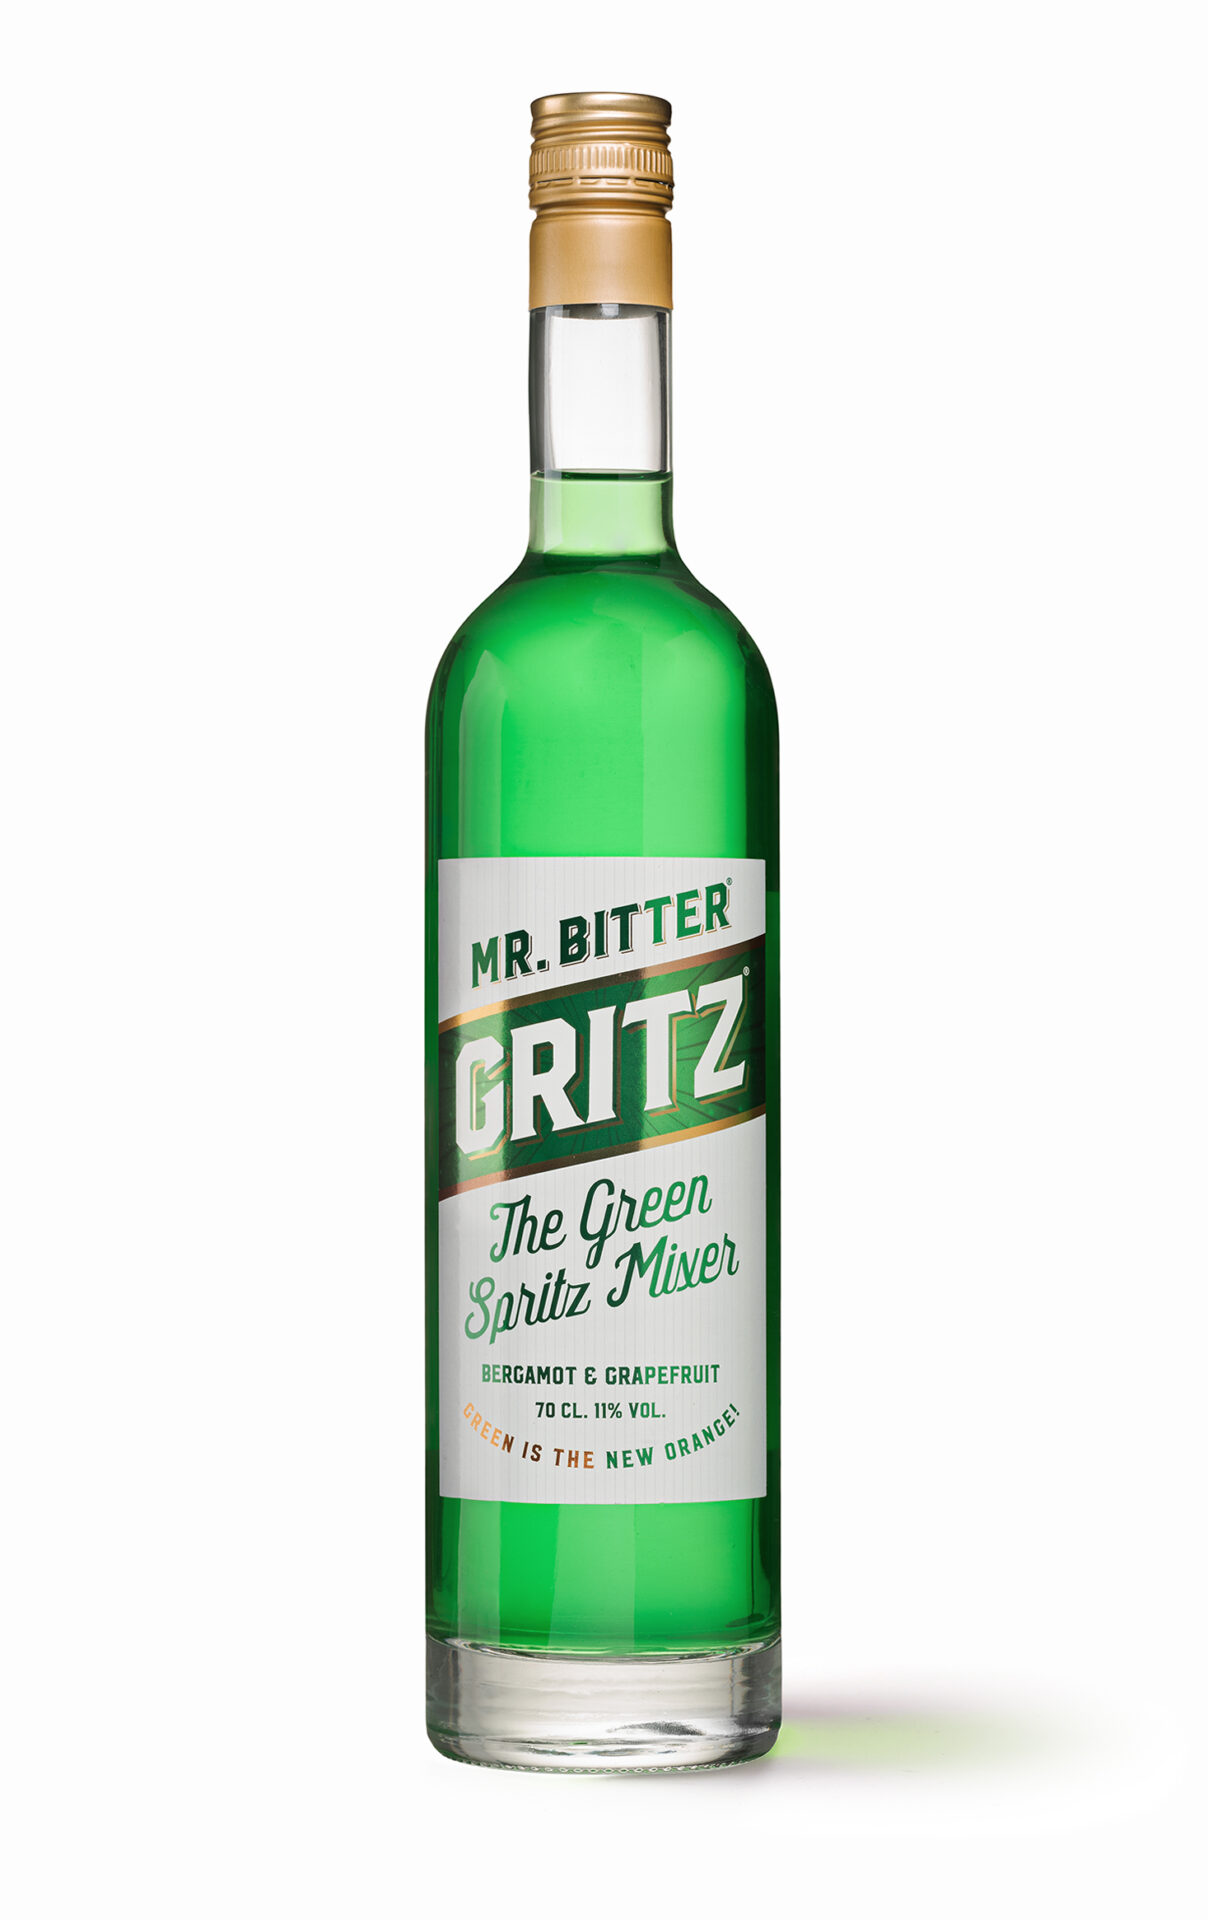 Mr. Bitter Gritz The Green Spritz Mixer